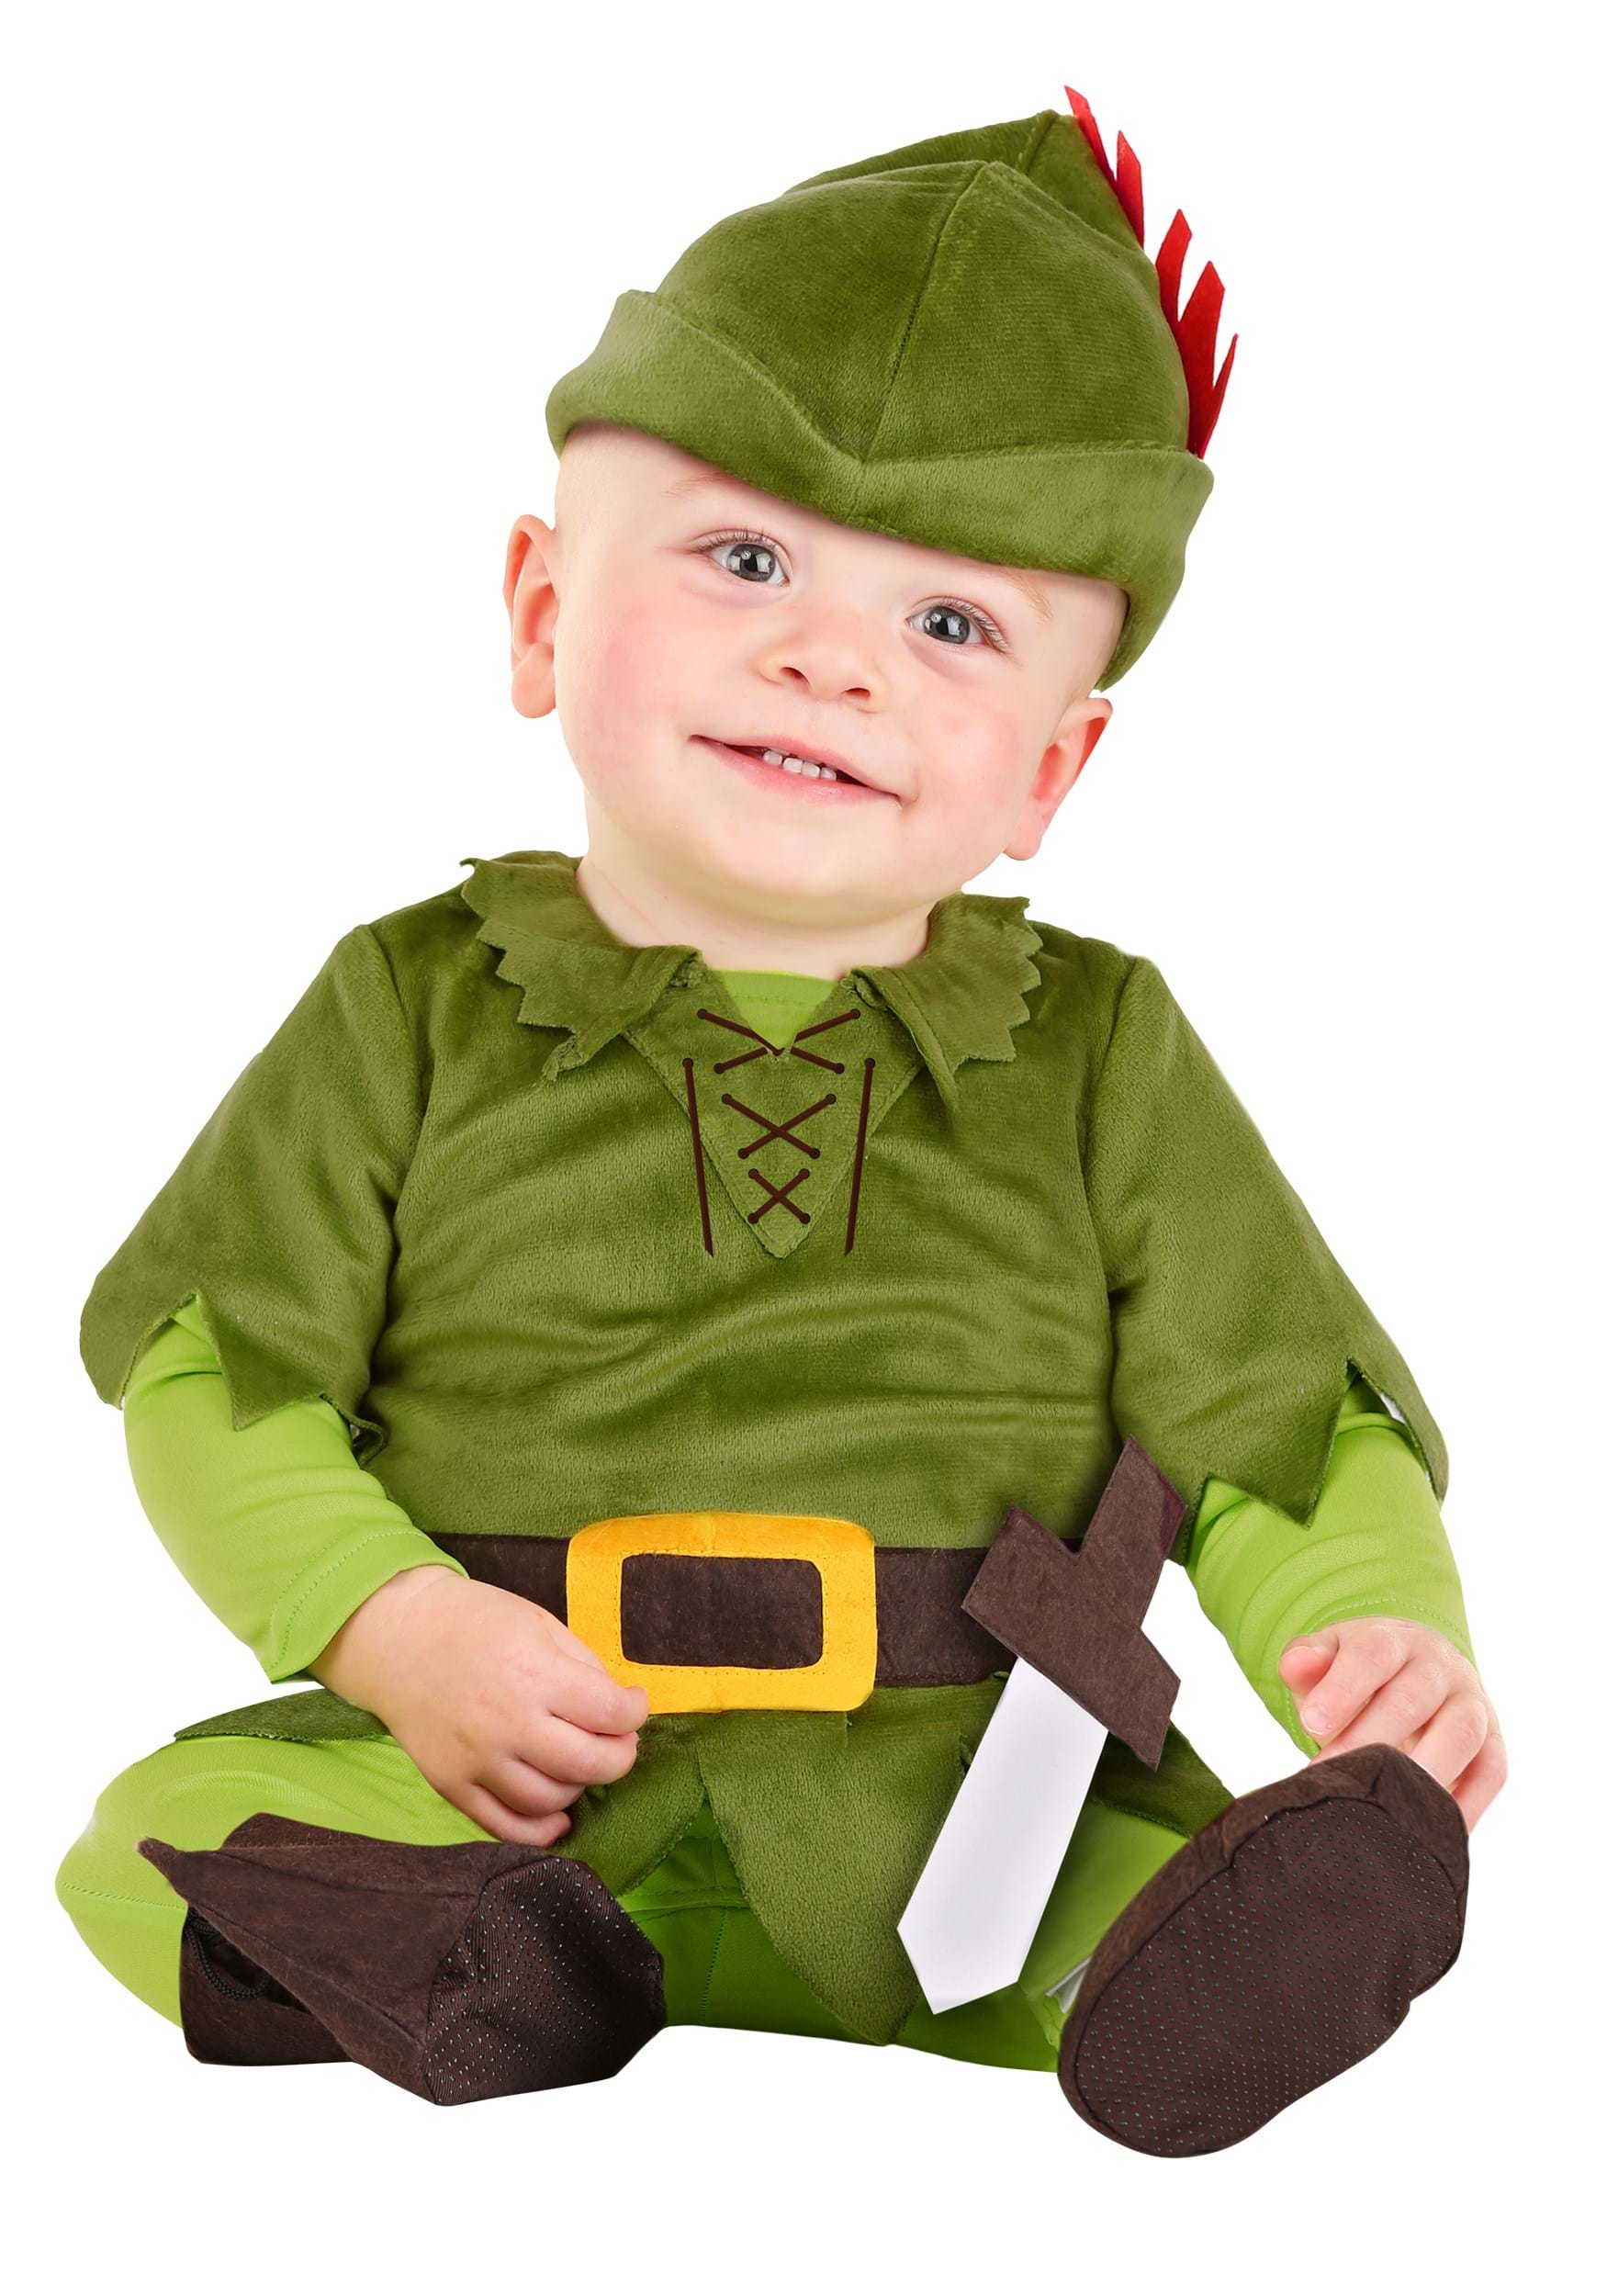 Photos - Fancy Dress FUN Costumes Peter Pan Infant Costume Green/Brown FUN1486IN